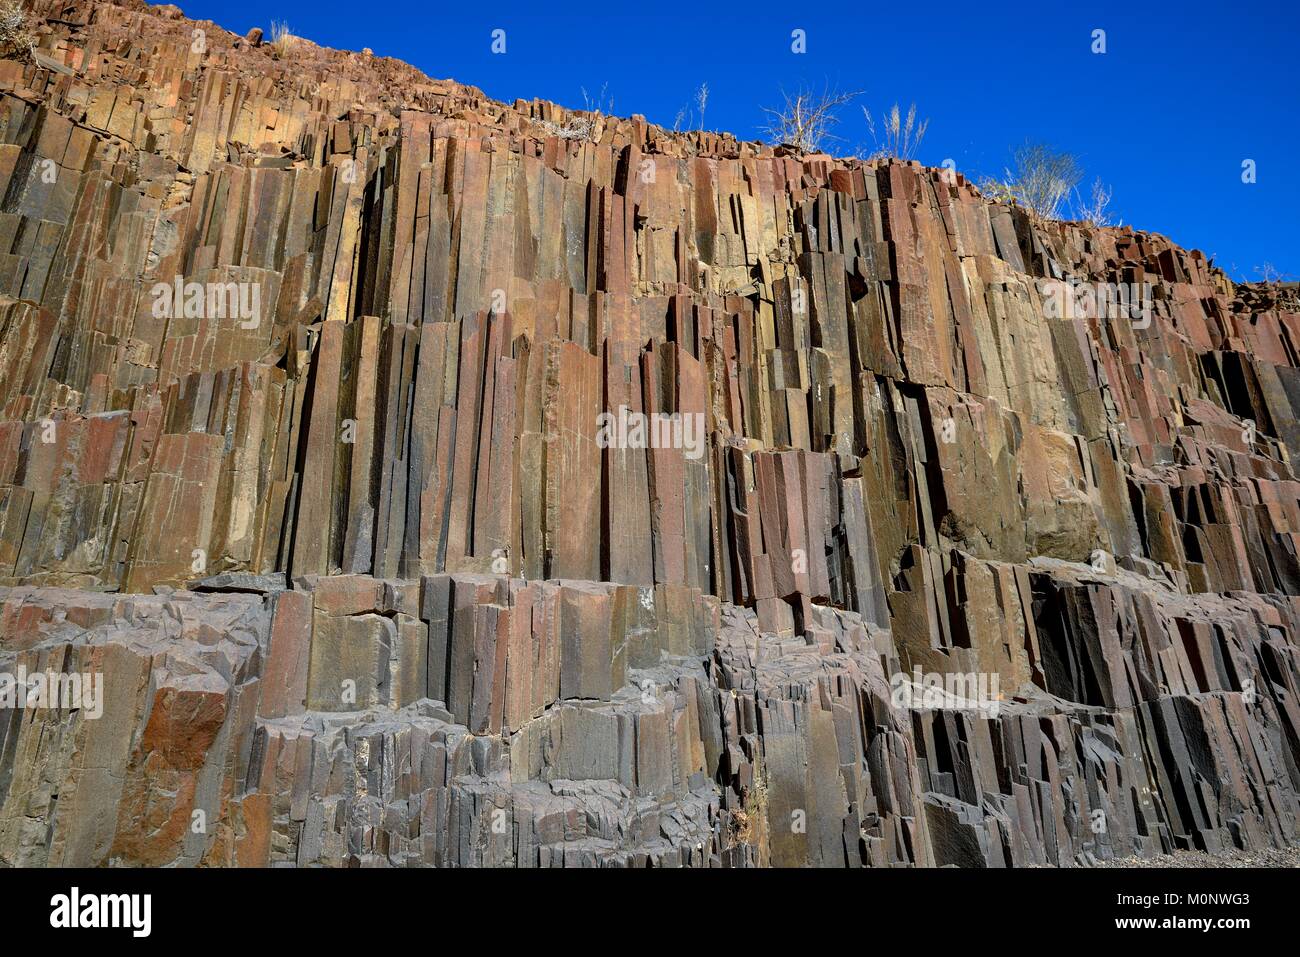 Columnas de basalto,órgano de tubos hechos de basalto,cerca de Twyfelfontein,región Kunene,Namibia Foto de stock